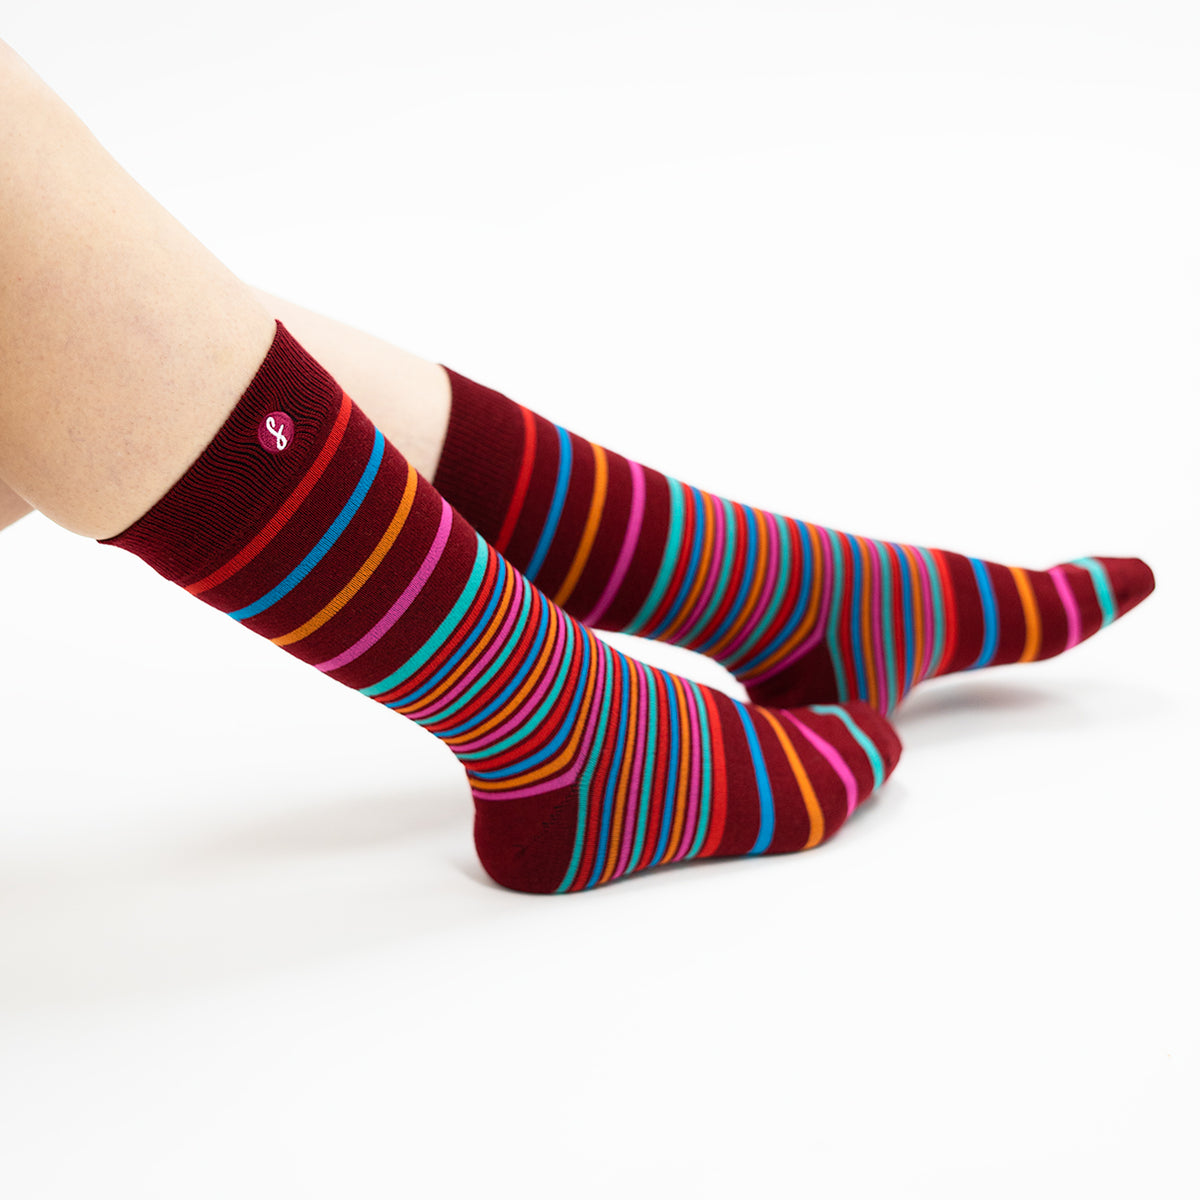 Colourful 3 Pack Shiraz Merino Wool Swanky Socks